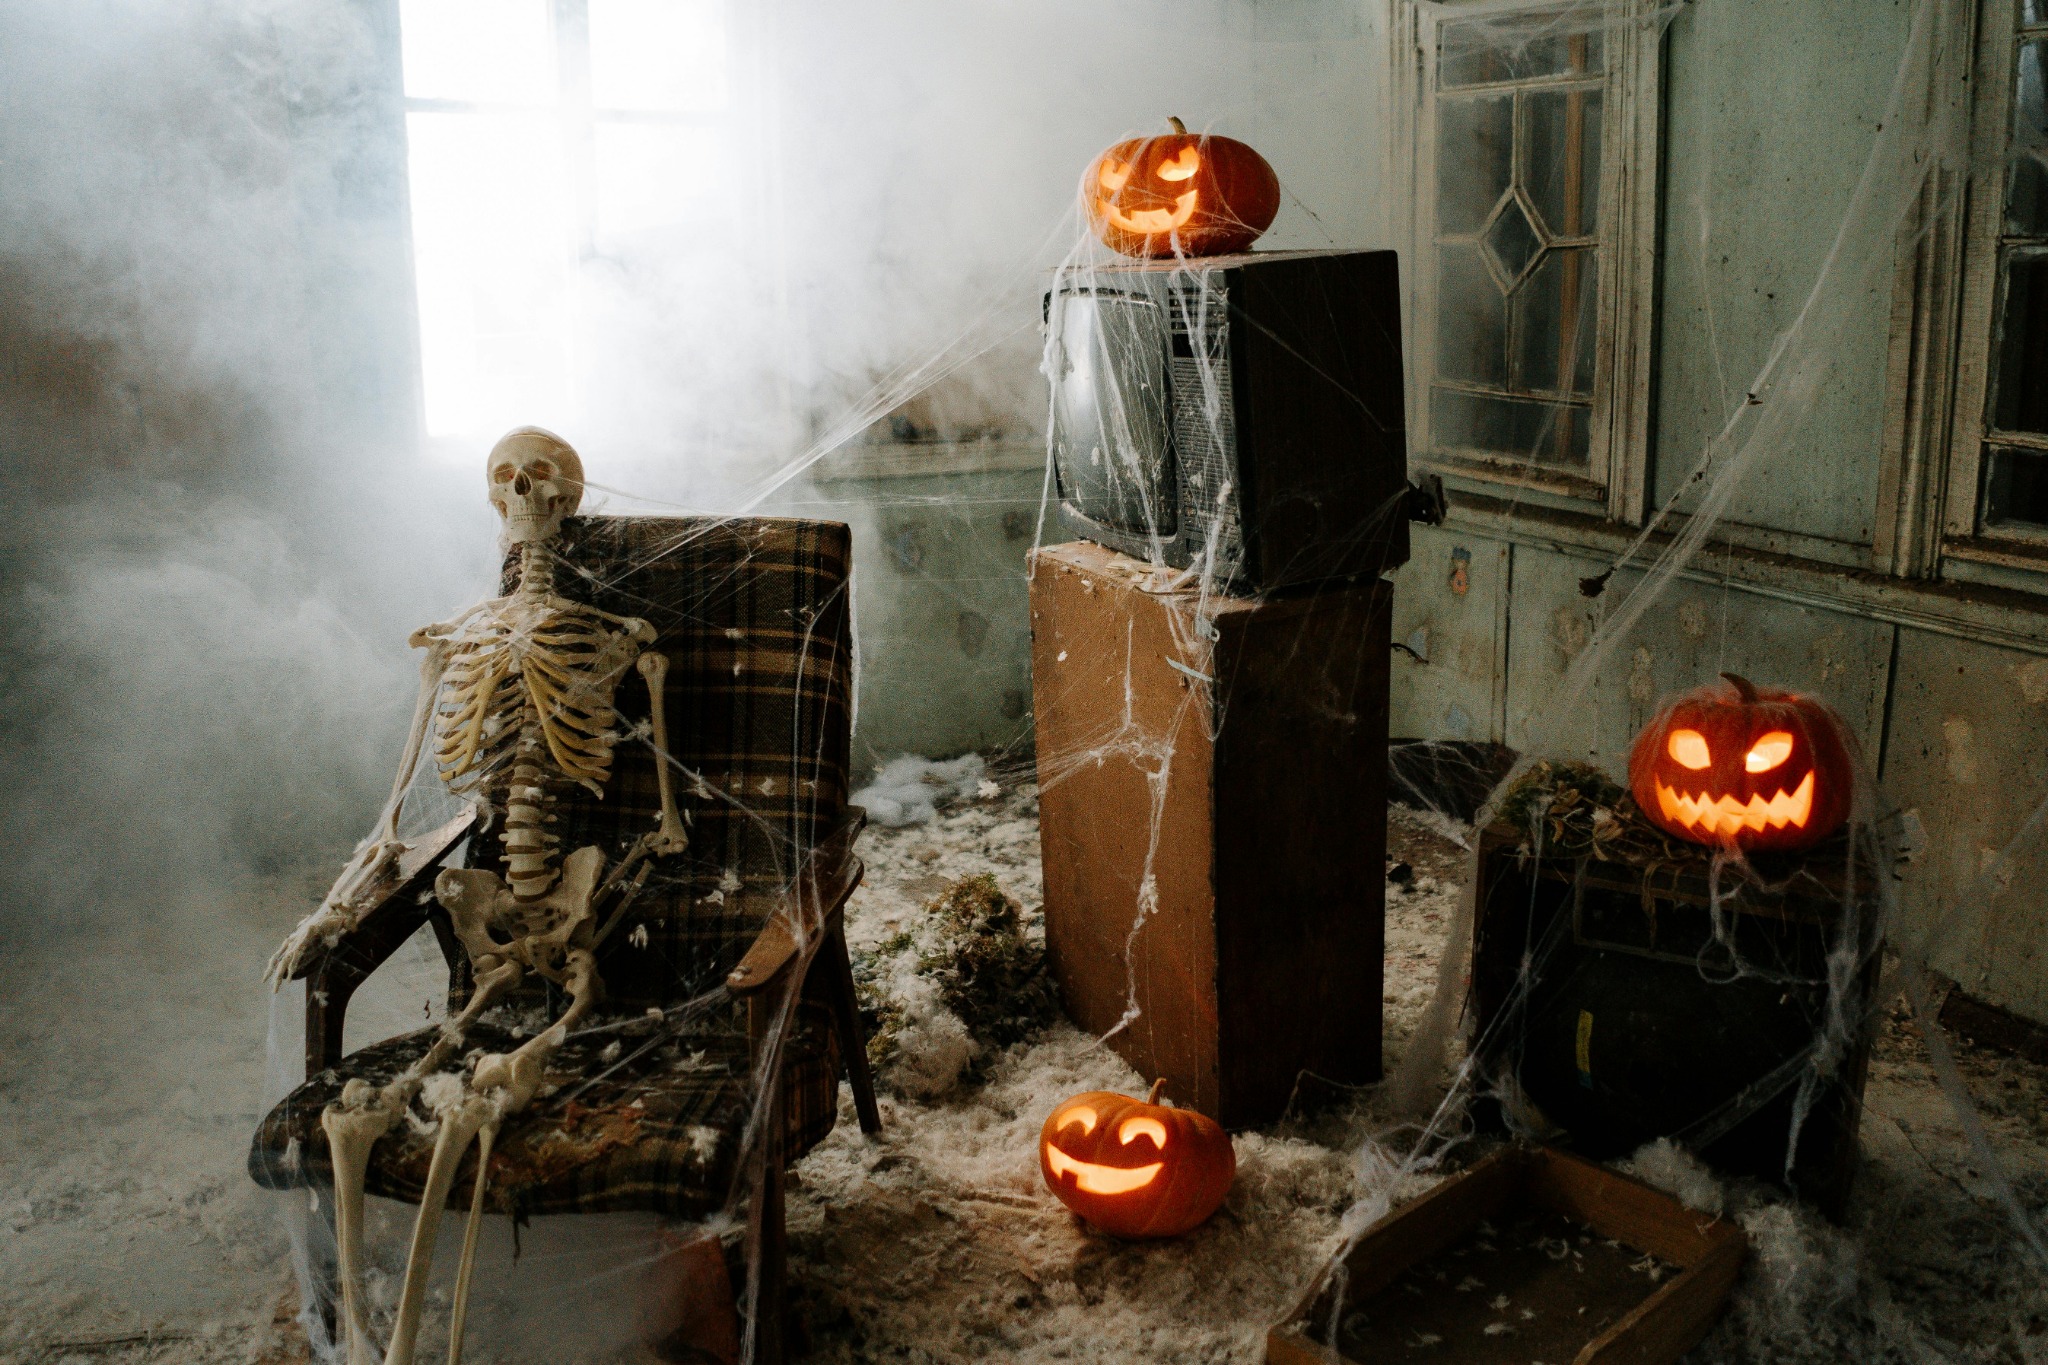 Halloween decor spooky setting